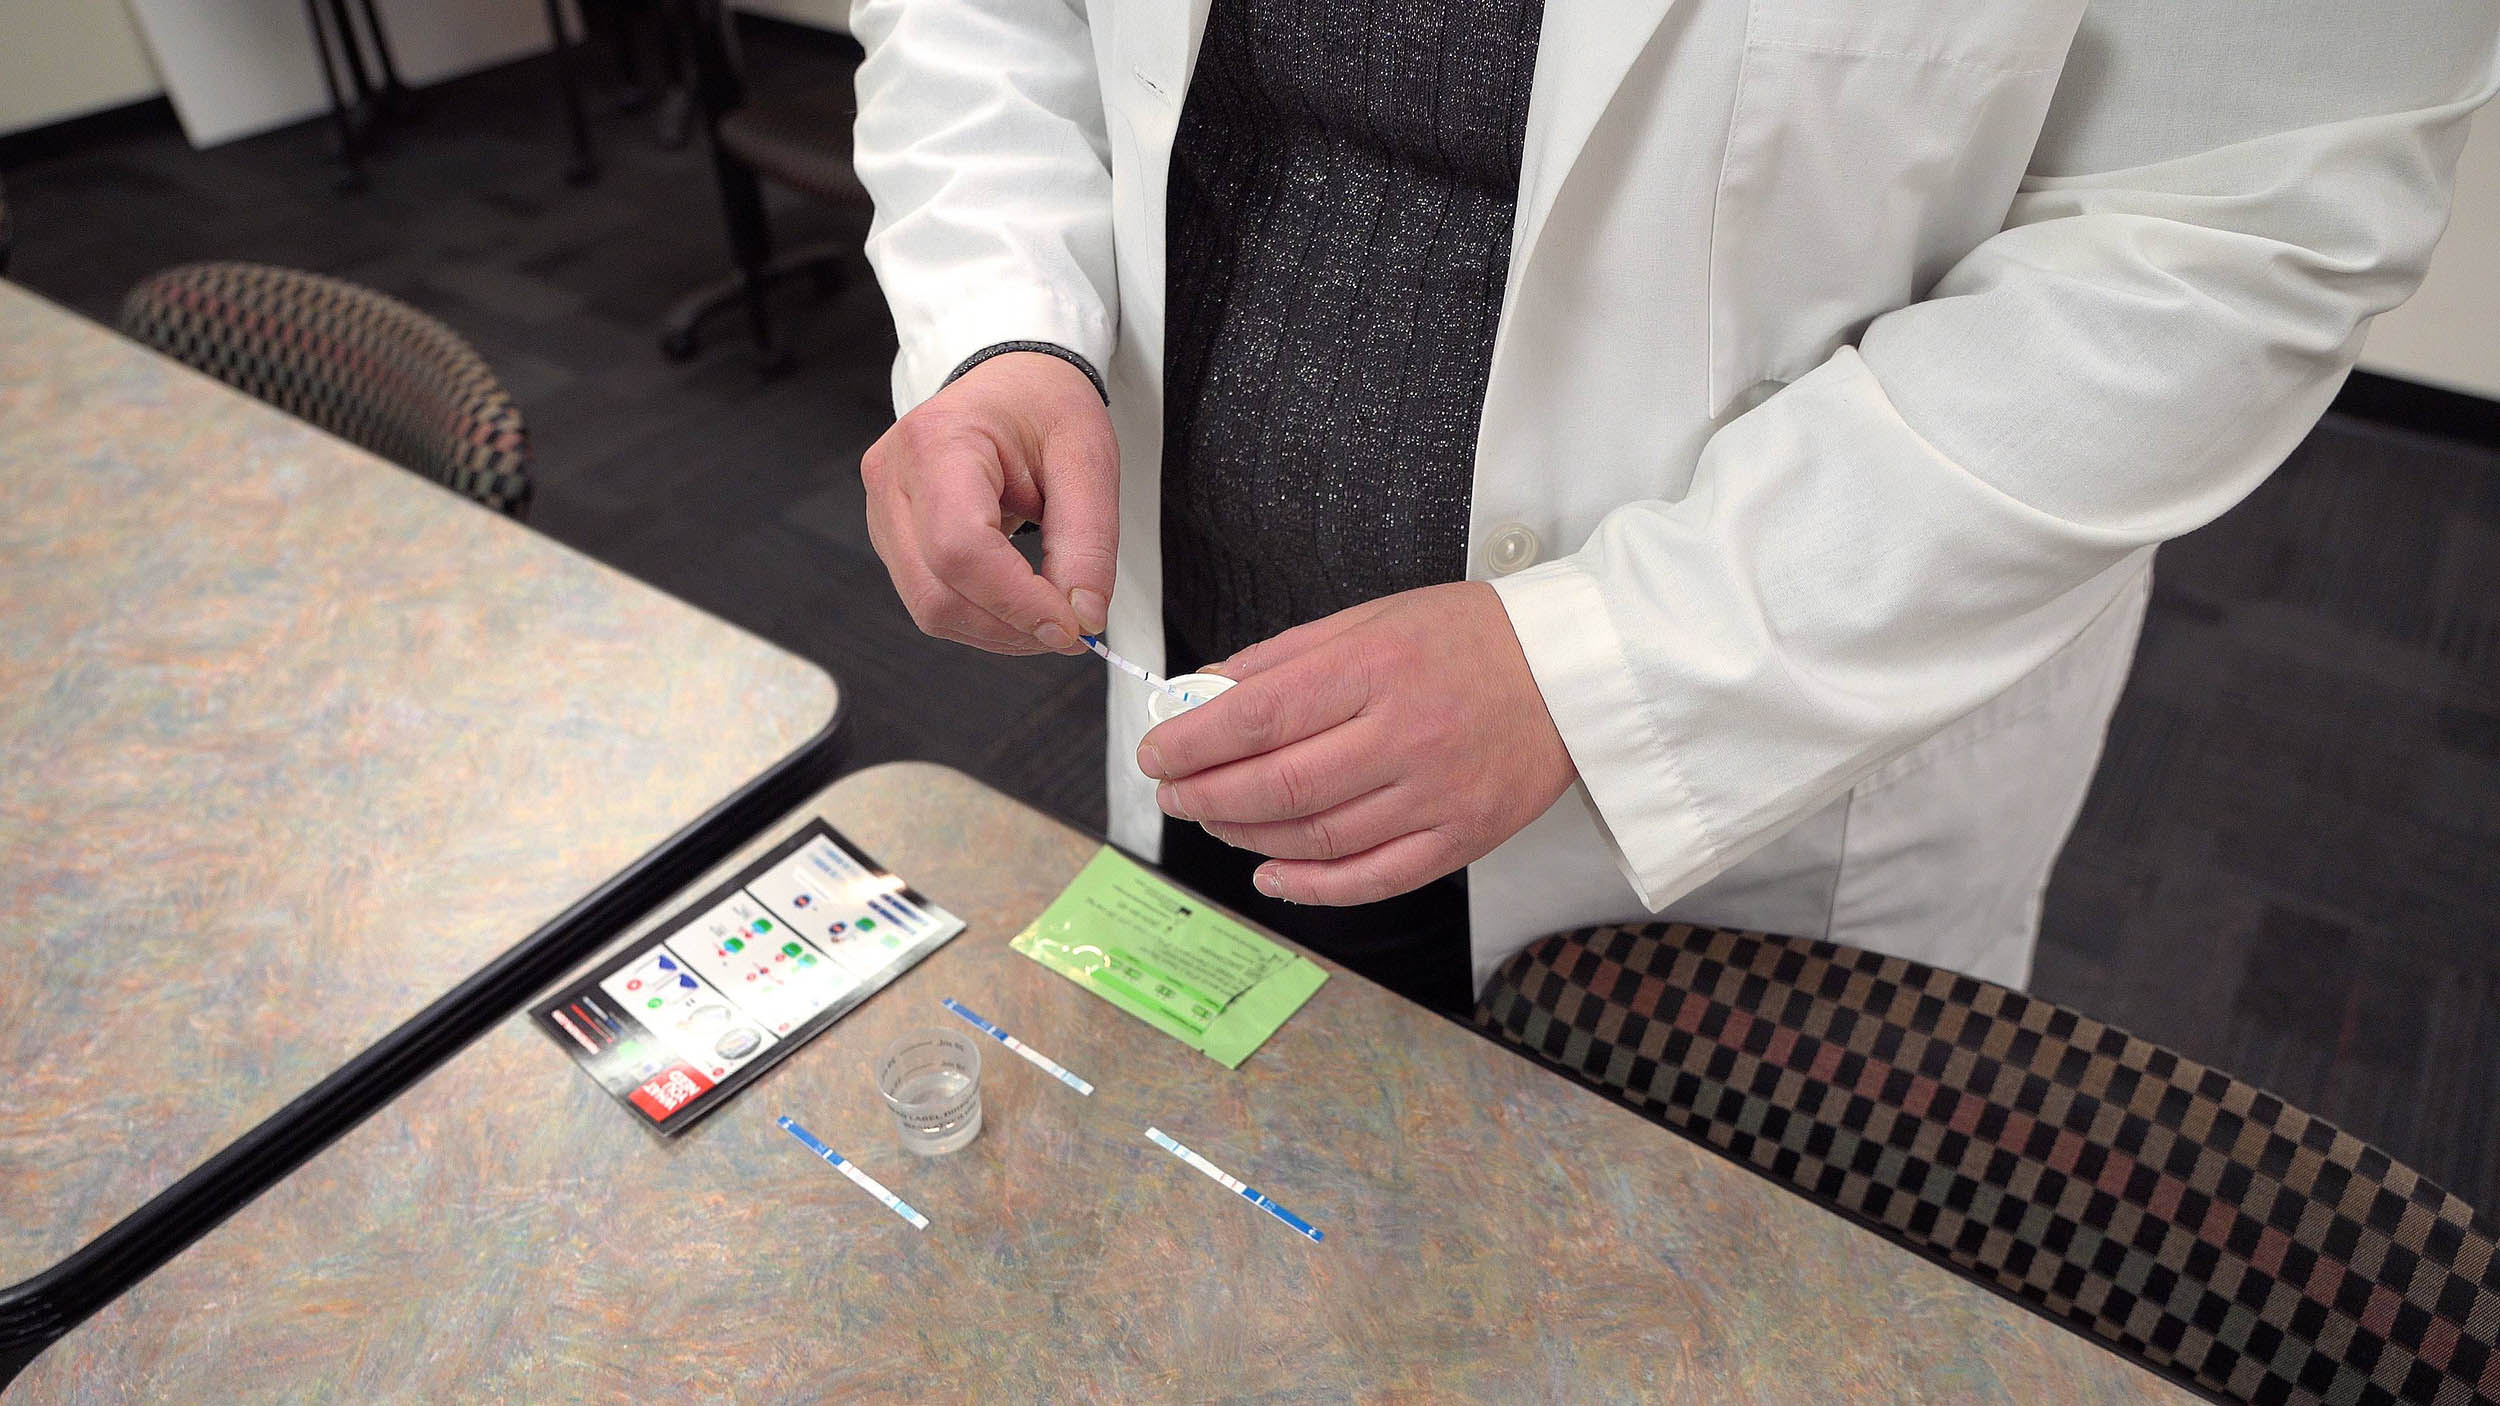 A medical professional showing off a fentanyl testing strip